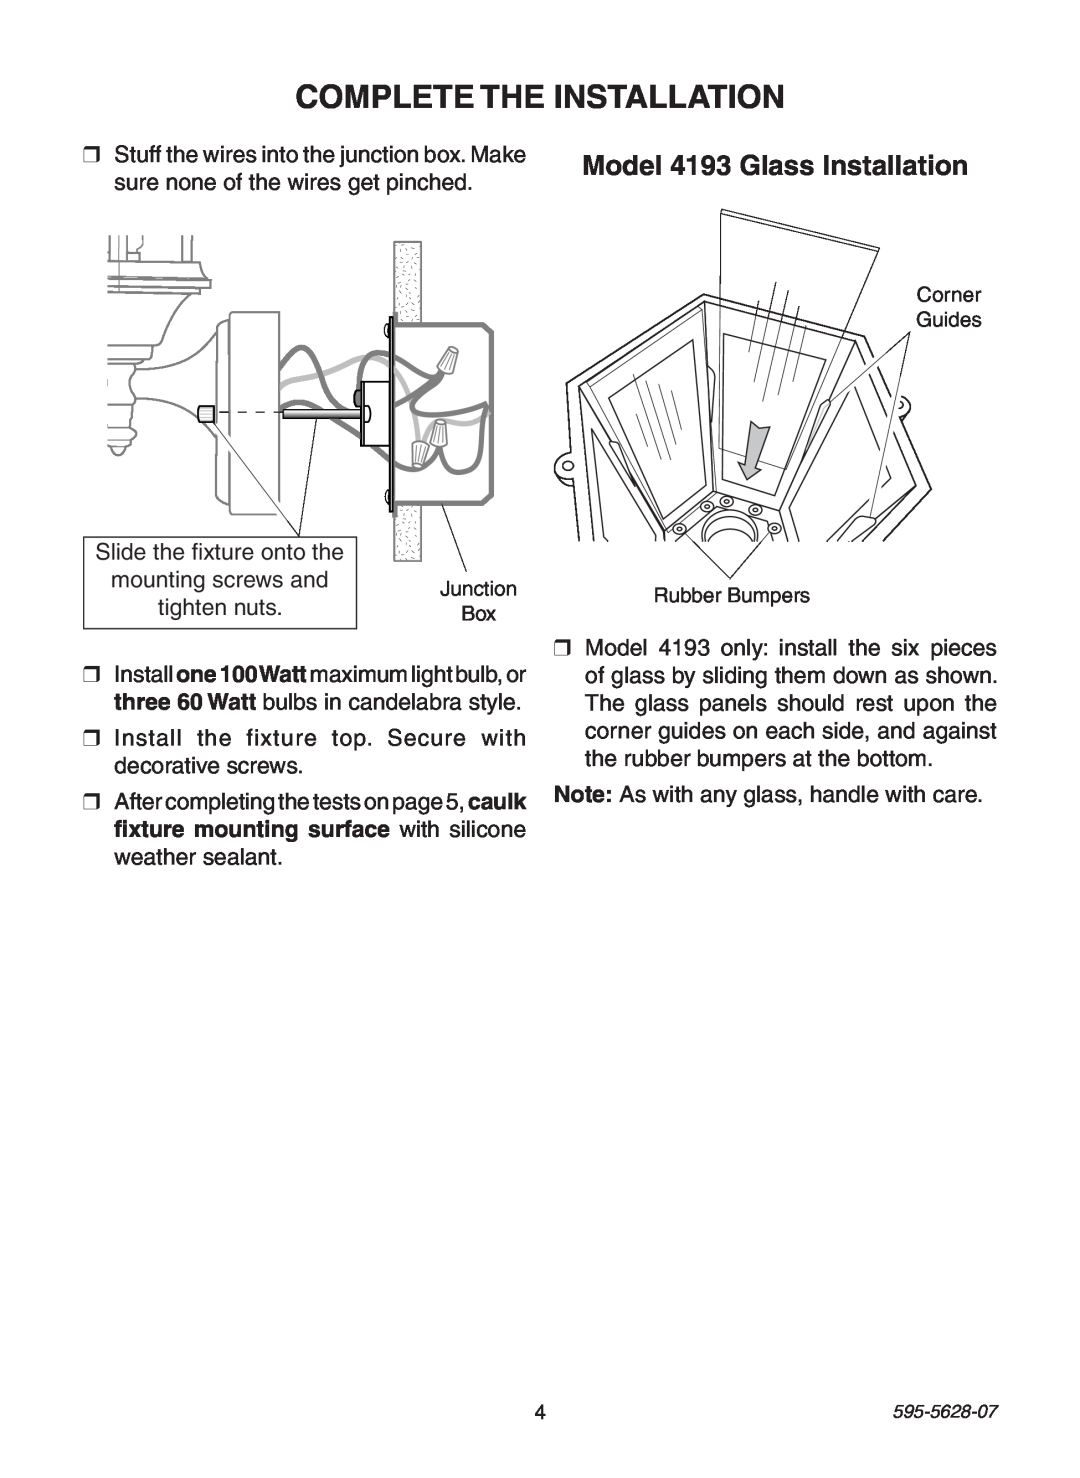 Heath Zenith SL-4190 manual Complete The Installation, Model 4193 Glass Installation 